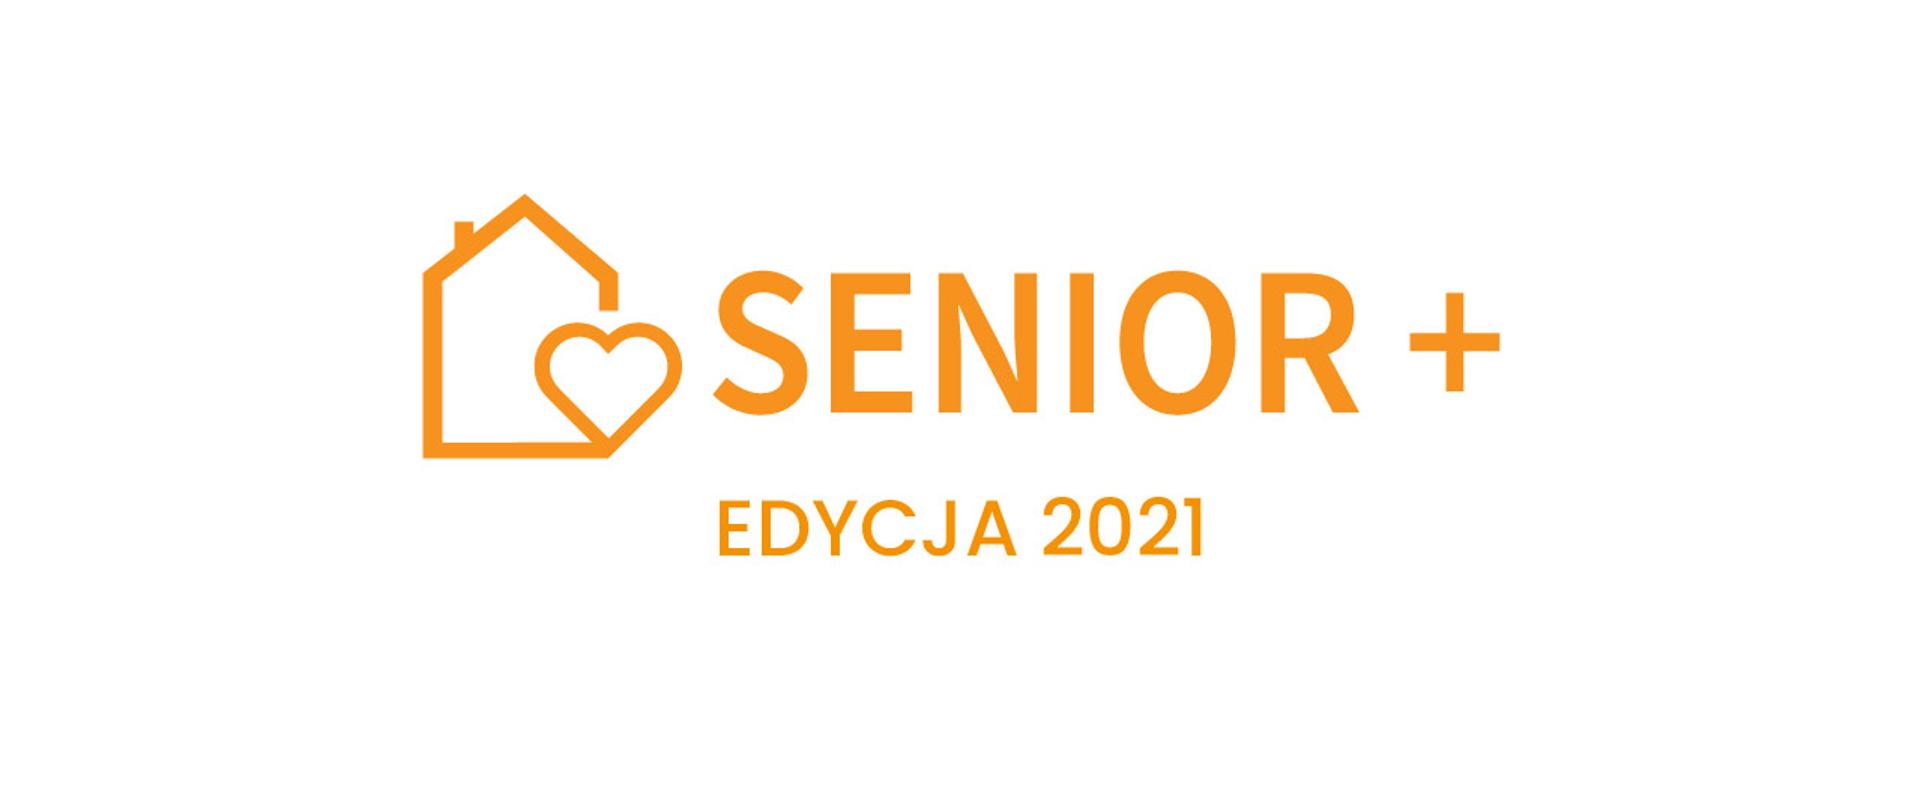 Senior+ - edycja 2021